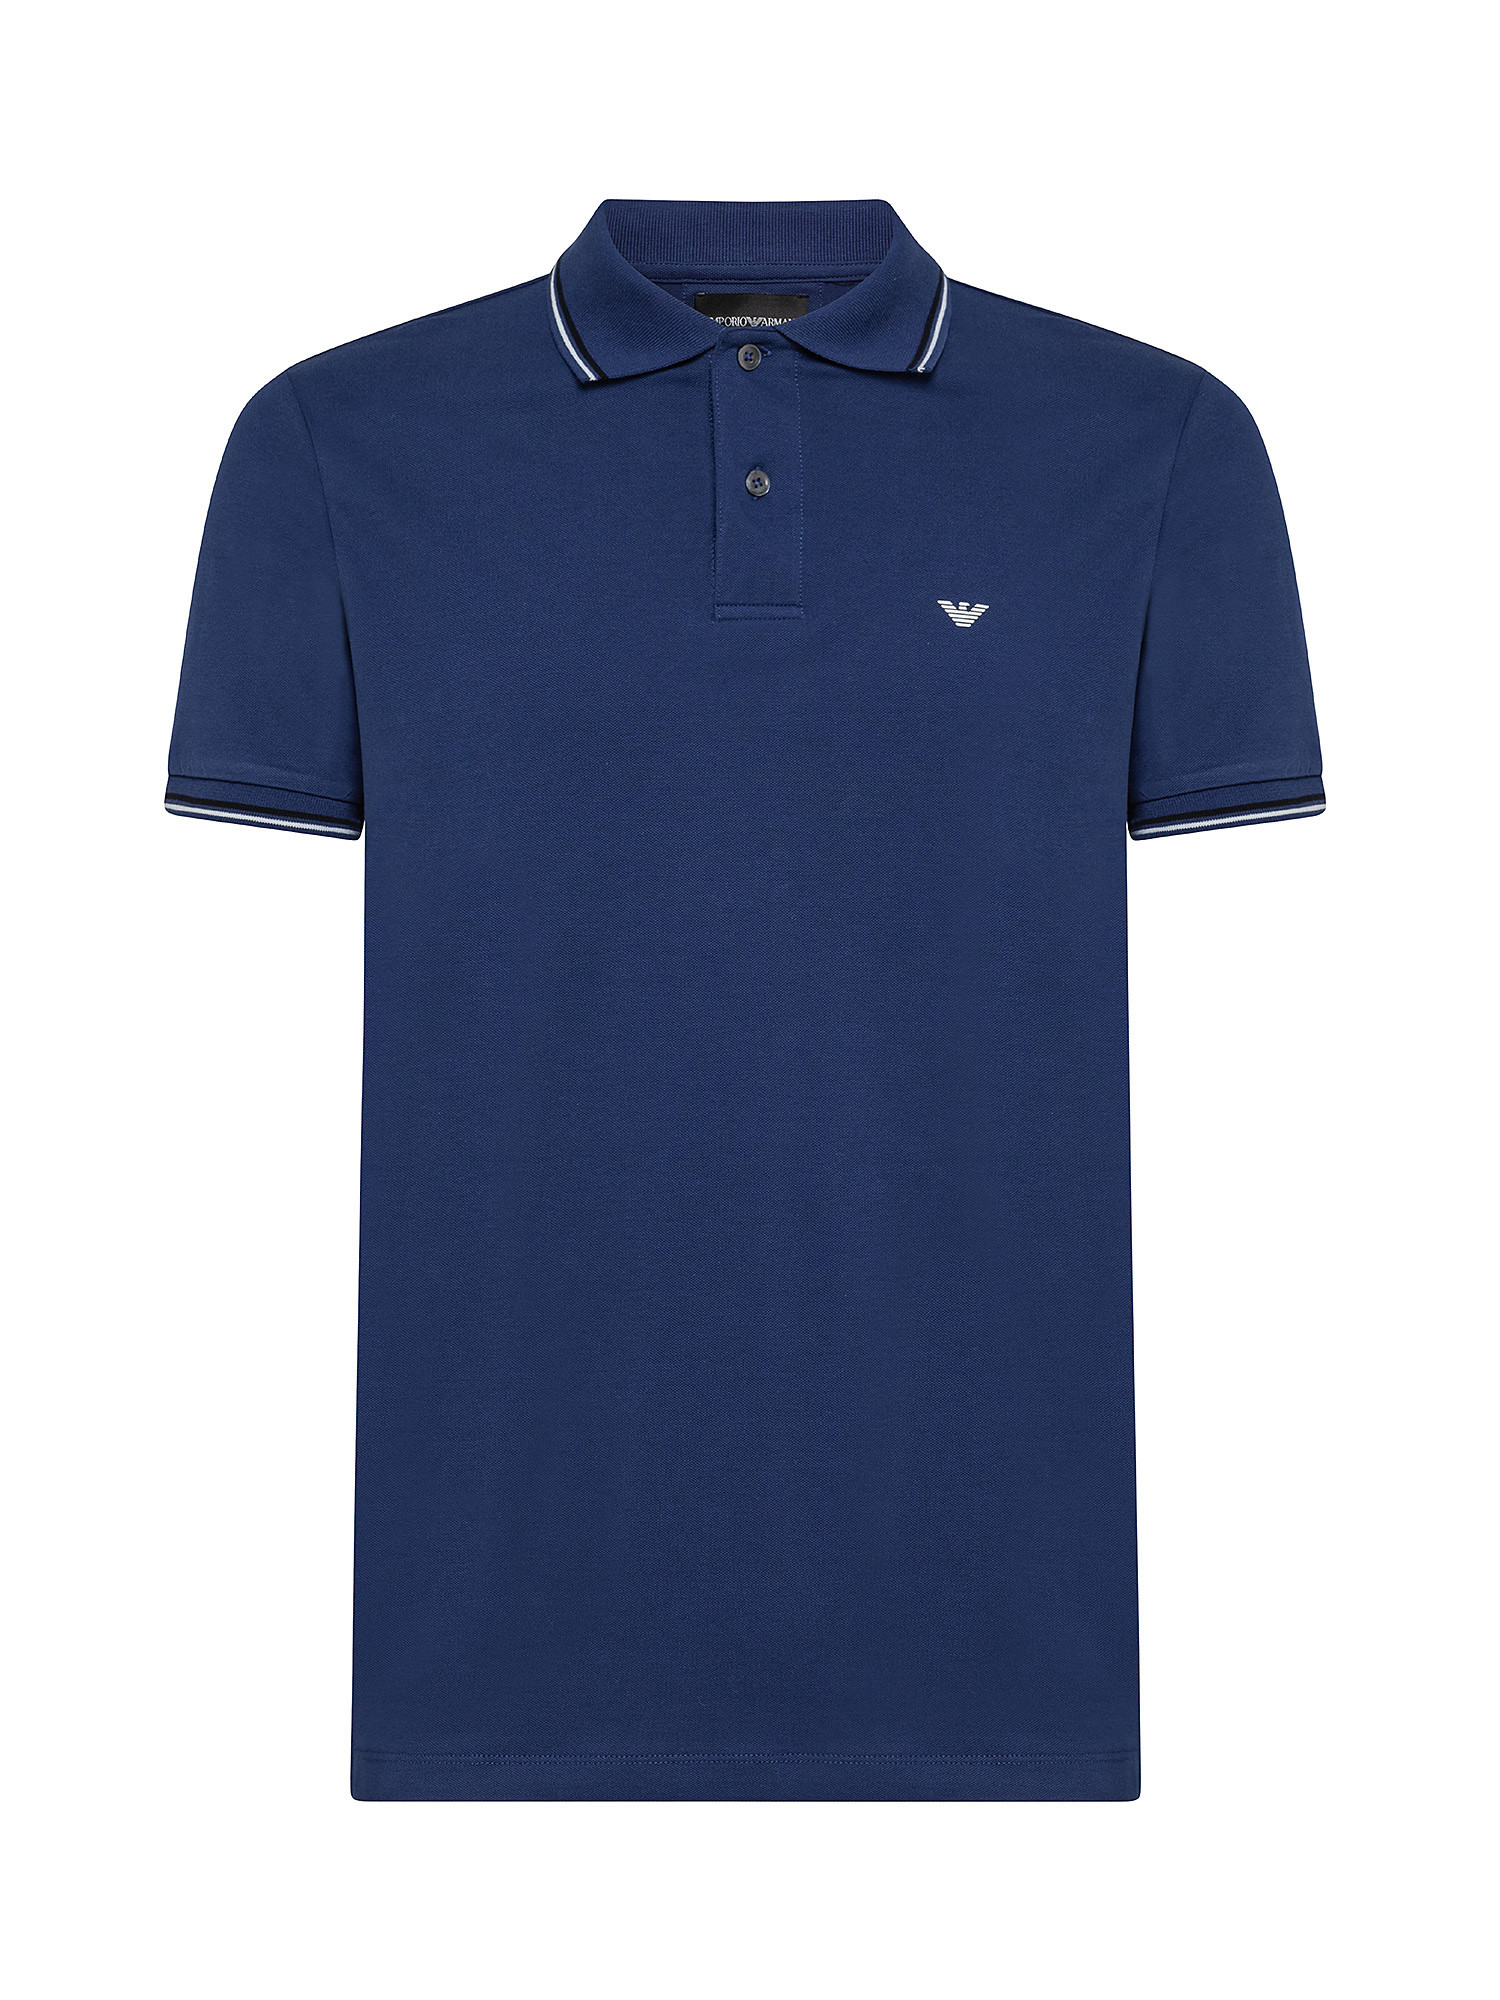 Piquet polo shirt, Blue, large image number 0